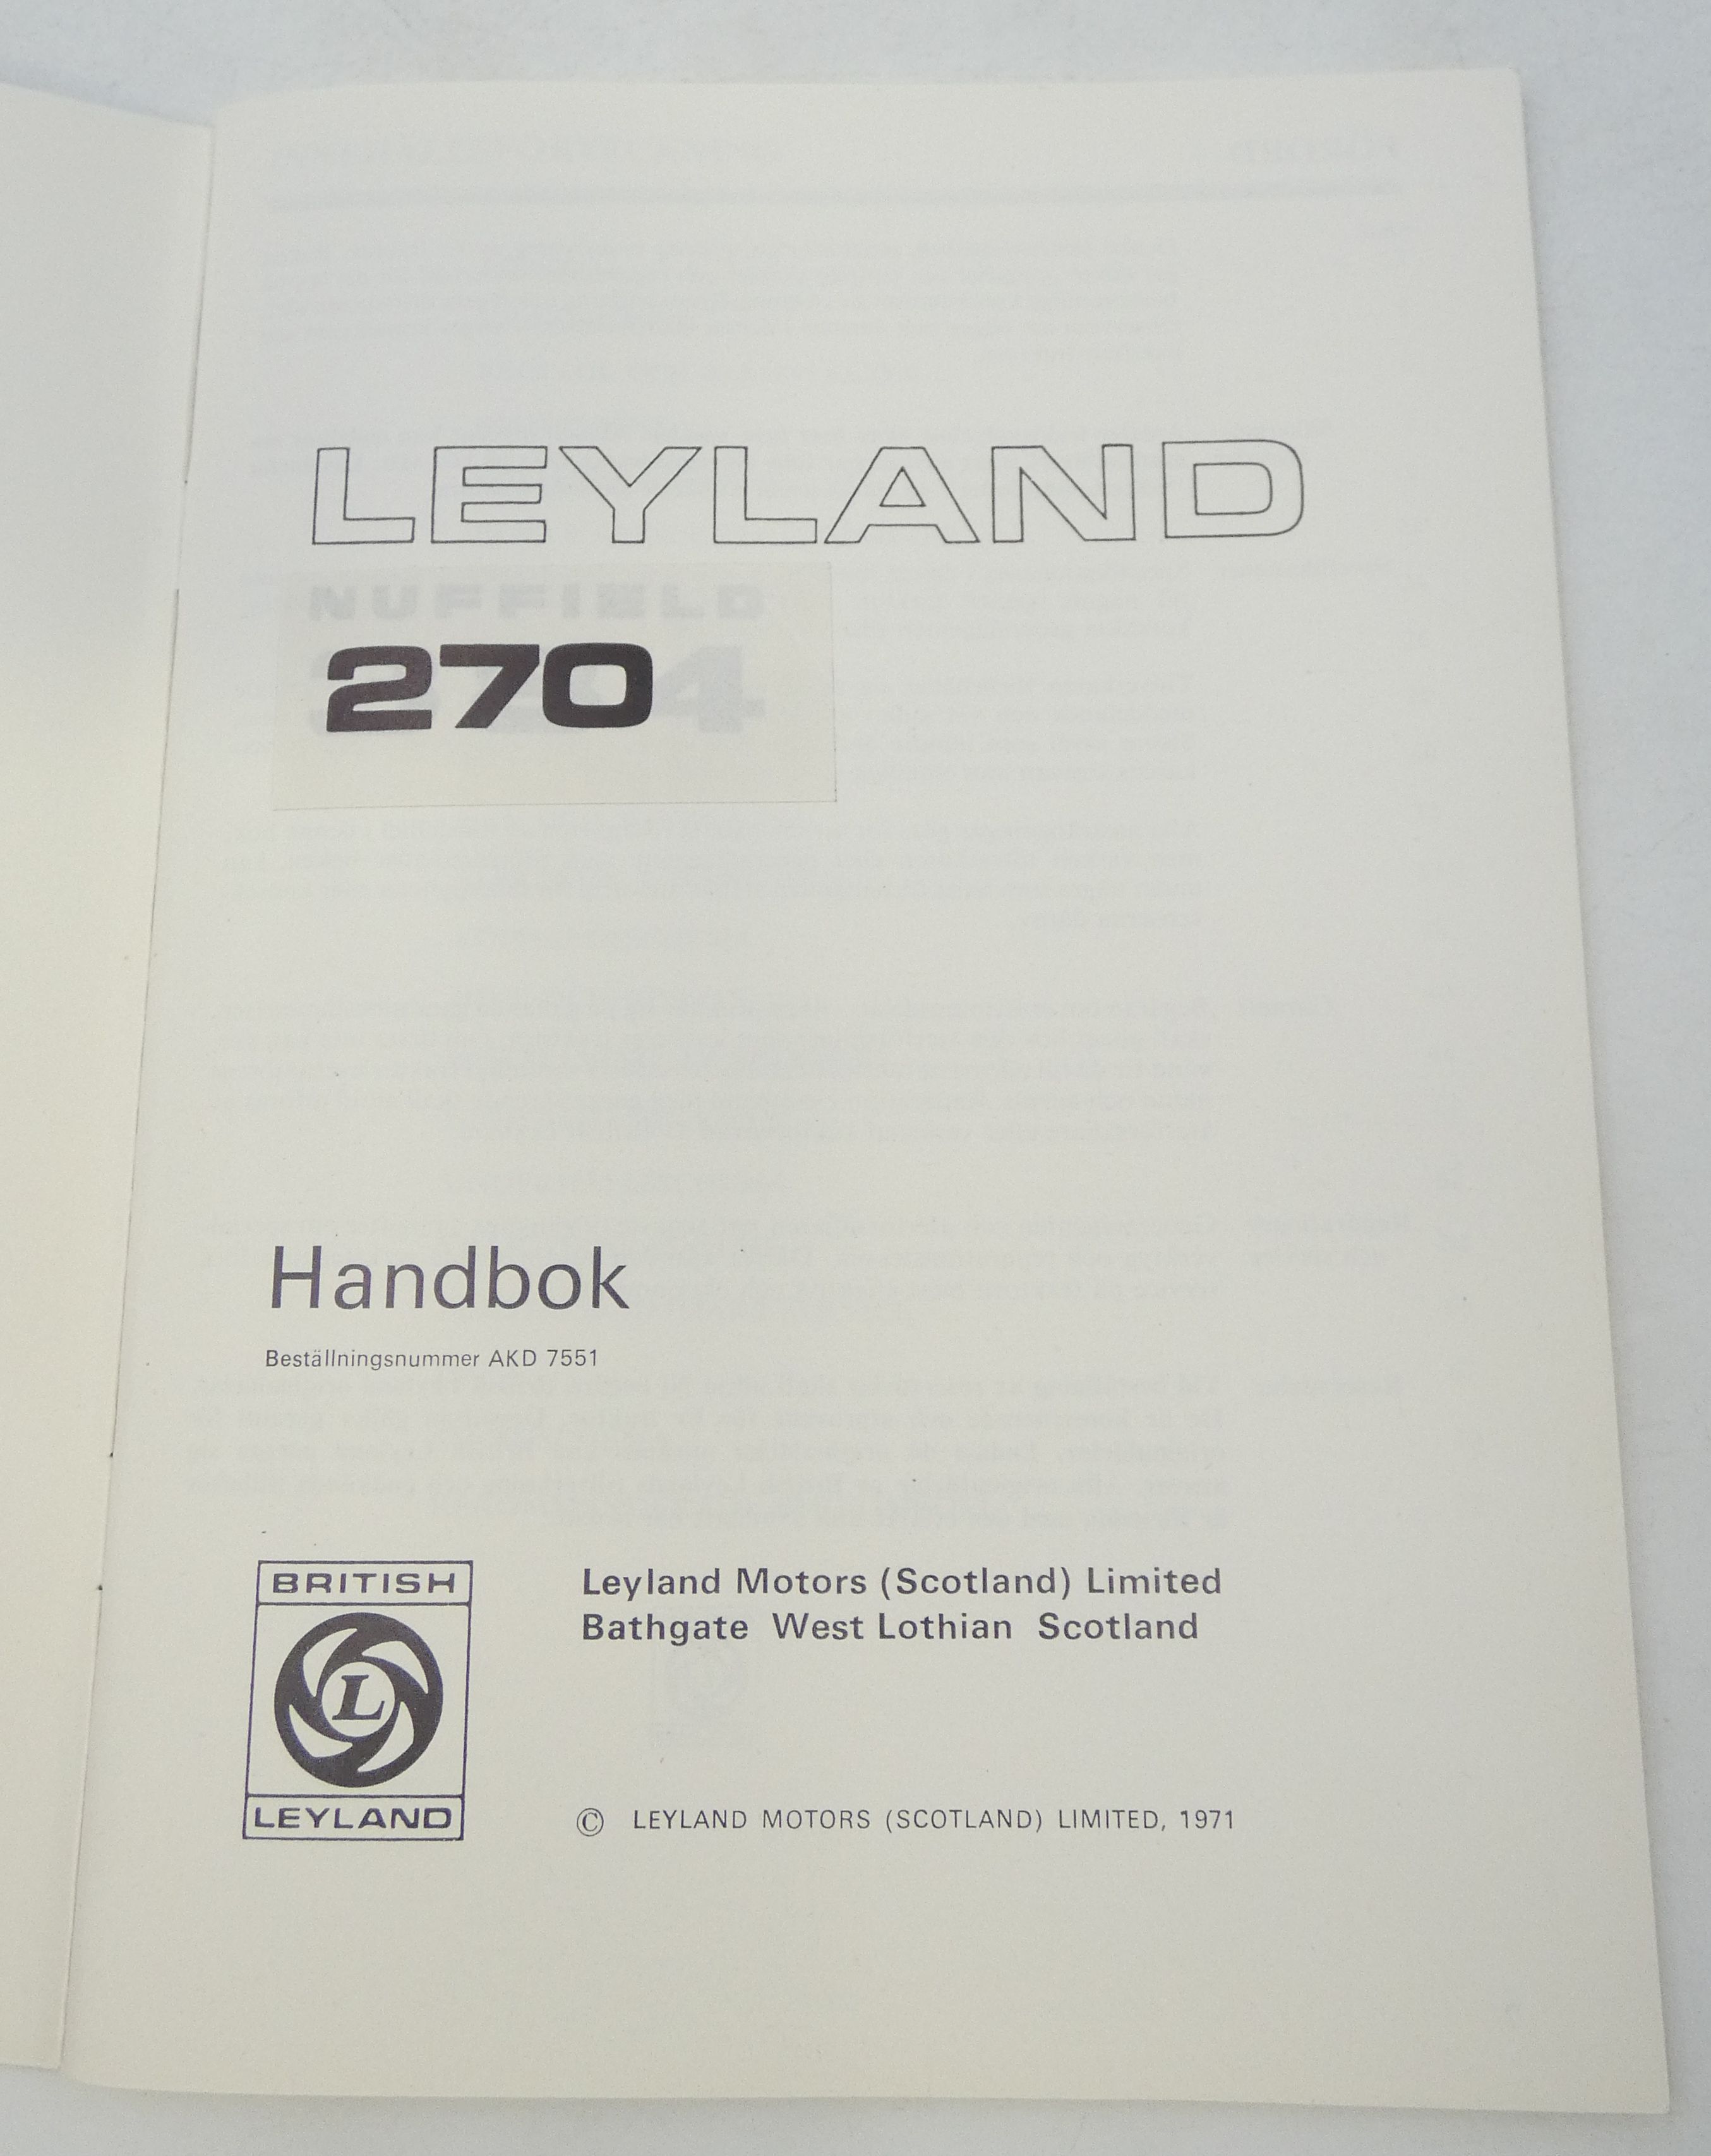 Leyland 270 handbok